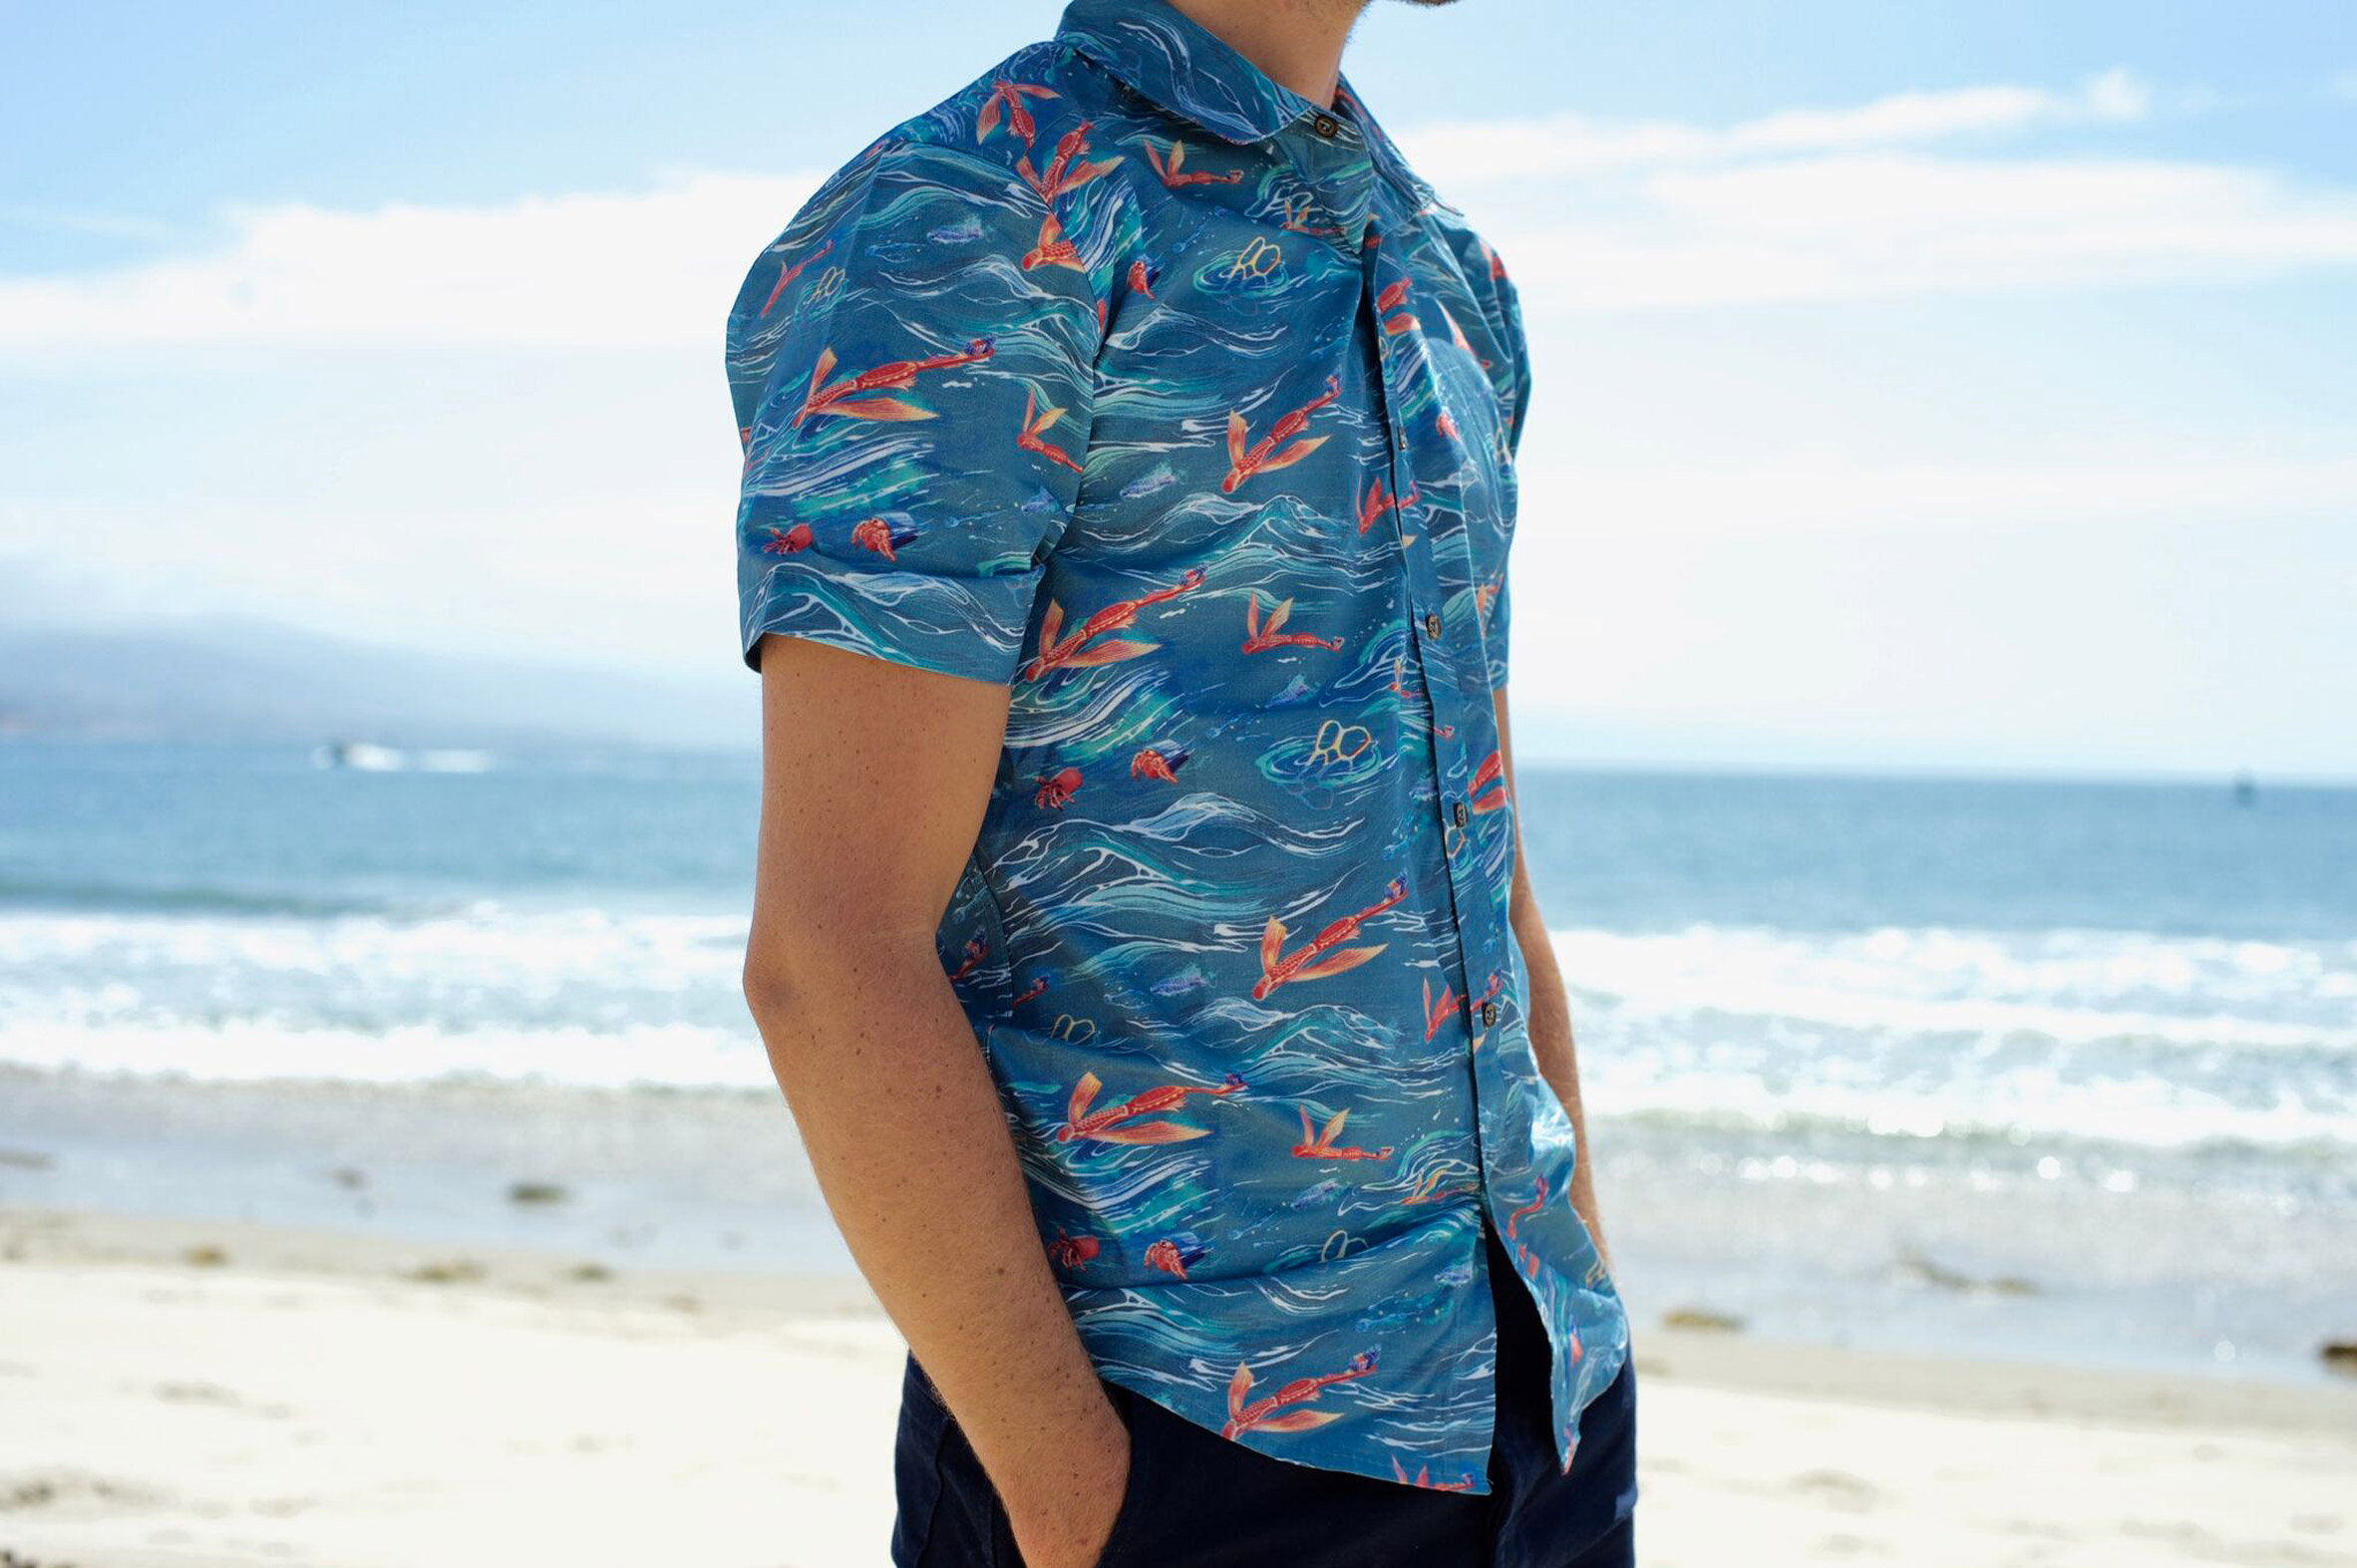 Waste plastic details on Hawaiian shirt highlights issue of ocean plastic